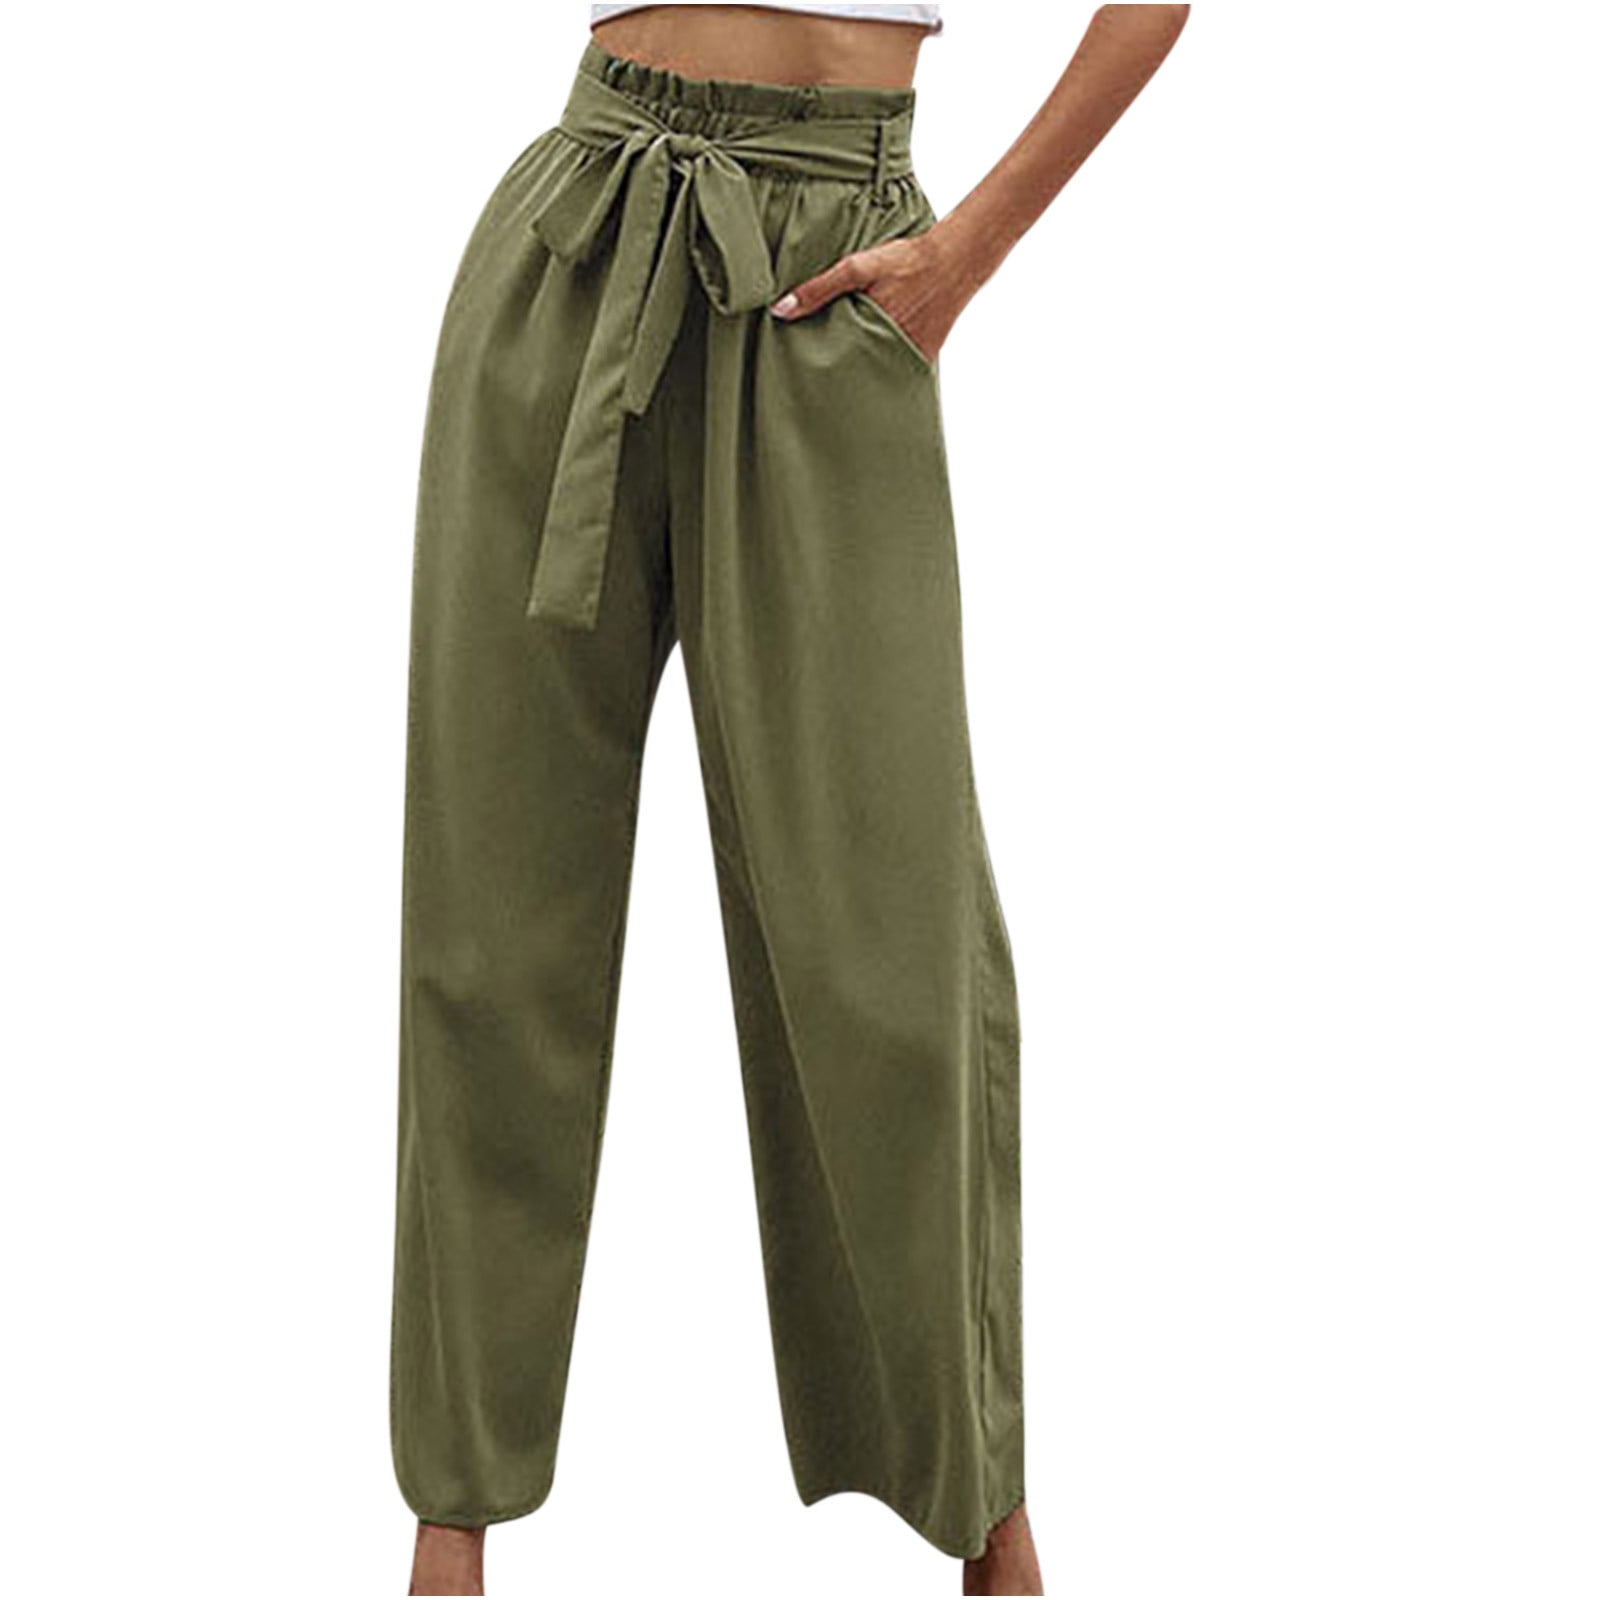 Summer Savings! Zpanxa Linen Pants for Women Fashion Solid Color Sashes  Straight Casual Long Pants Trousers Workout Yoga Pants Athletic Lounge  Pants